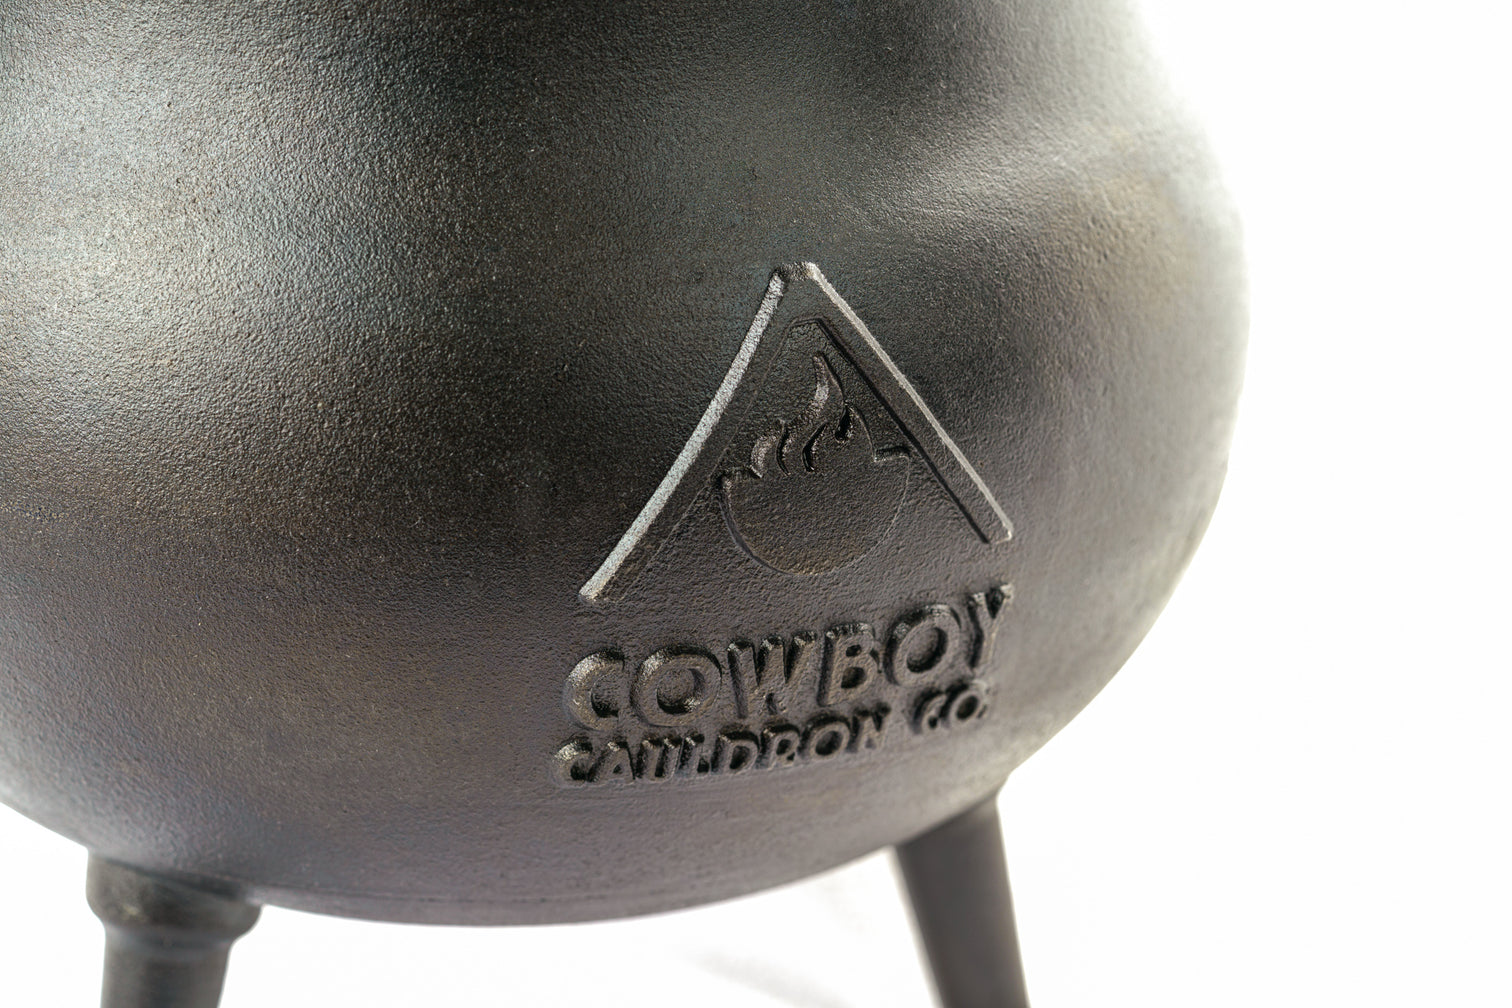 Cowboy Cauldron Co. The Chuckwagon Pot